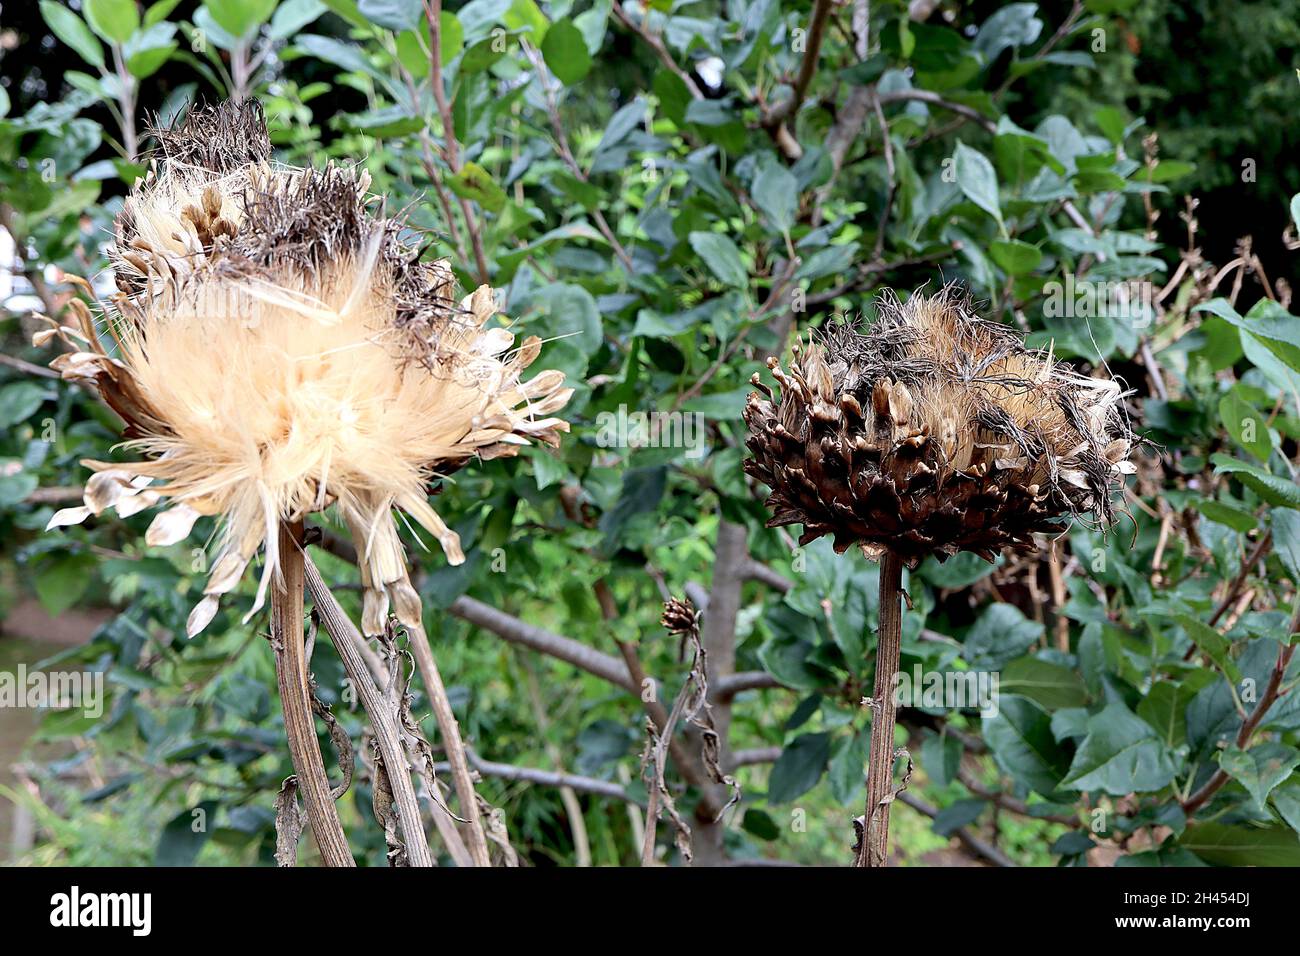 Cynara cardunculus var Scolymus  globe artichoke – large buff seed heads atop basket-like bracts,   October, England, UK Stock Photo